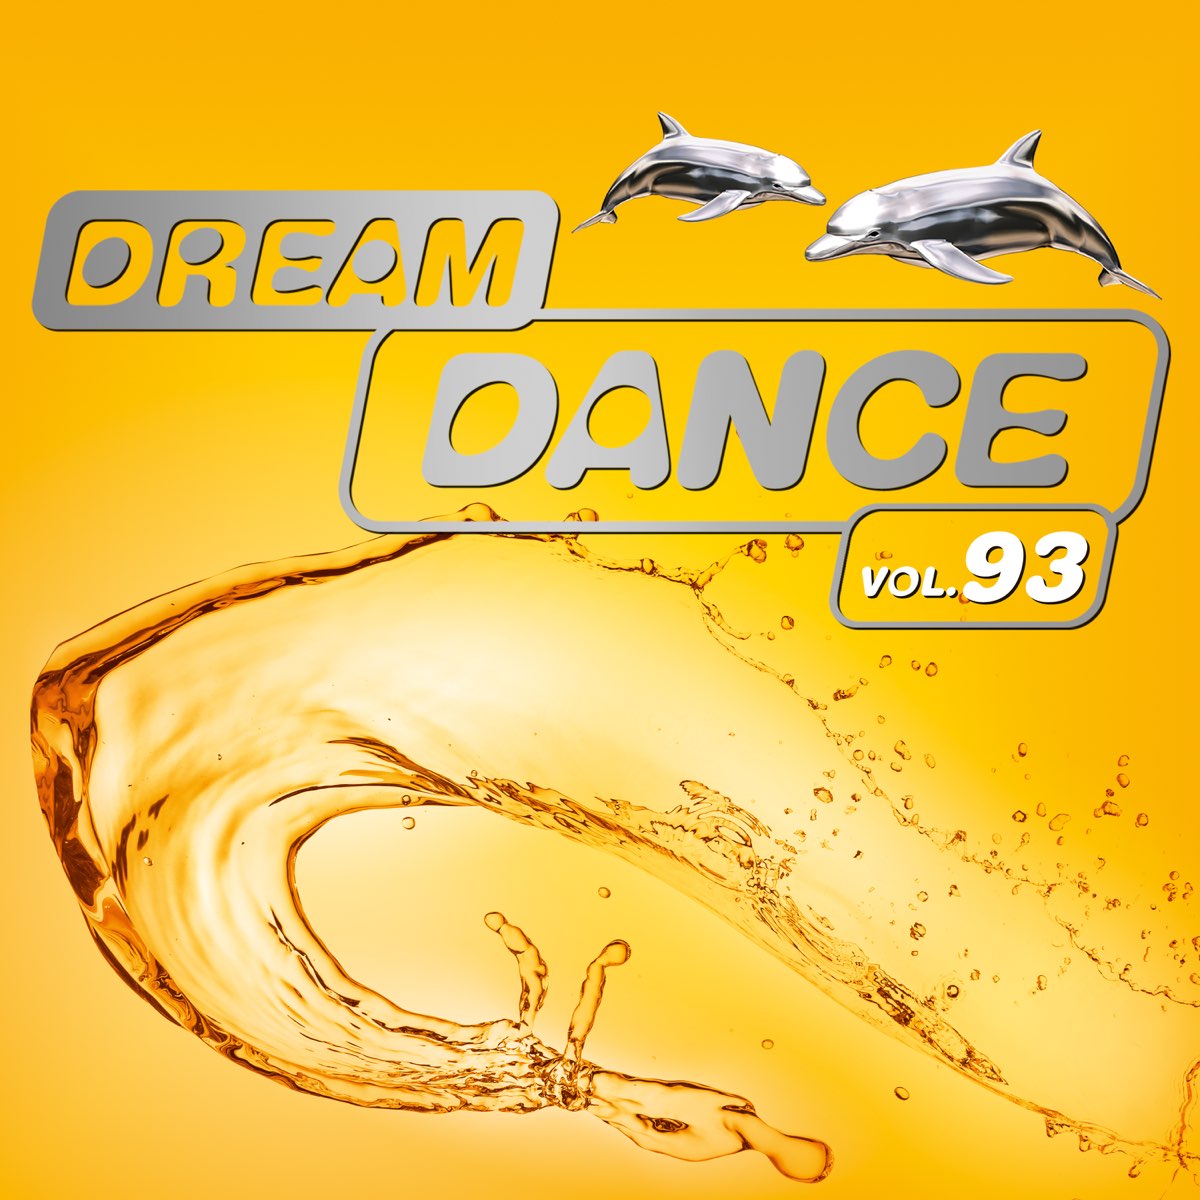 Dream Dance Vol 93 (2022)